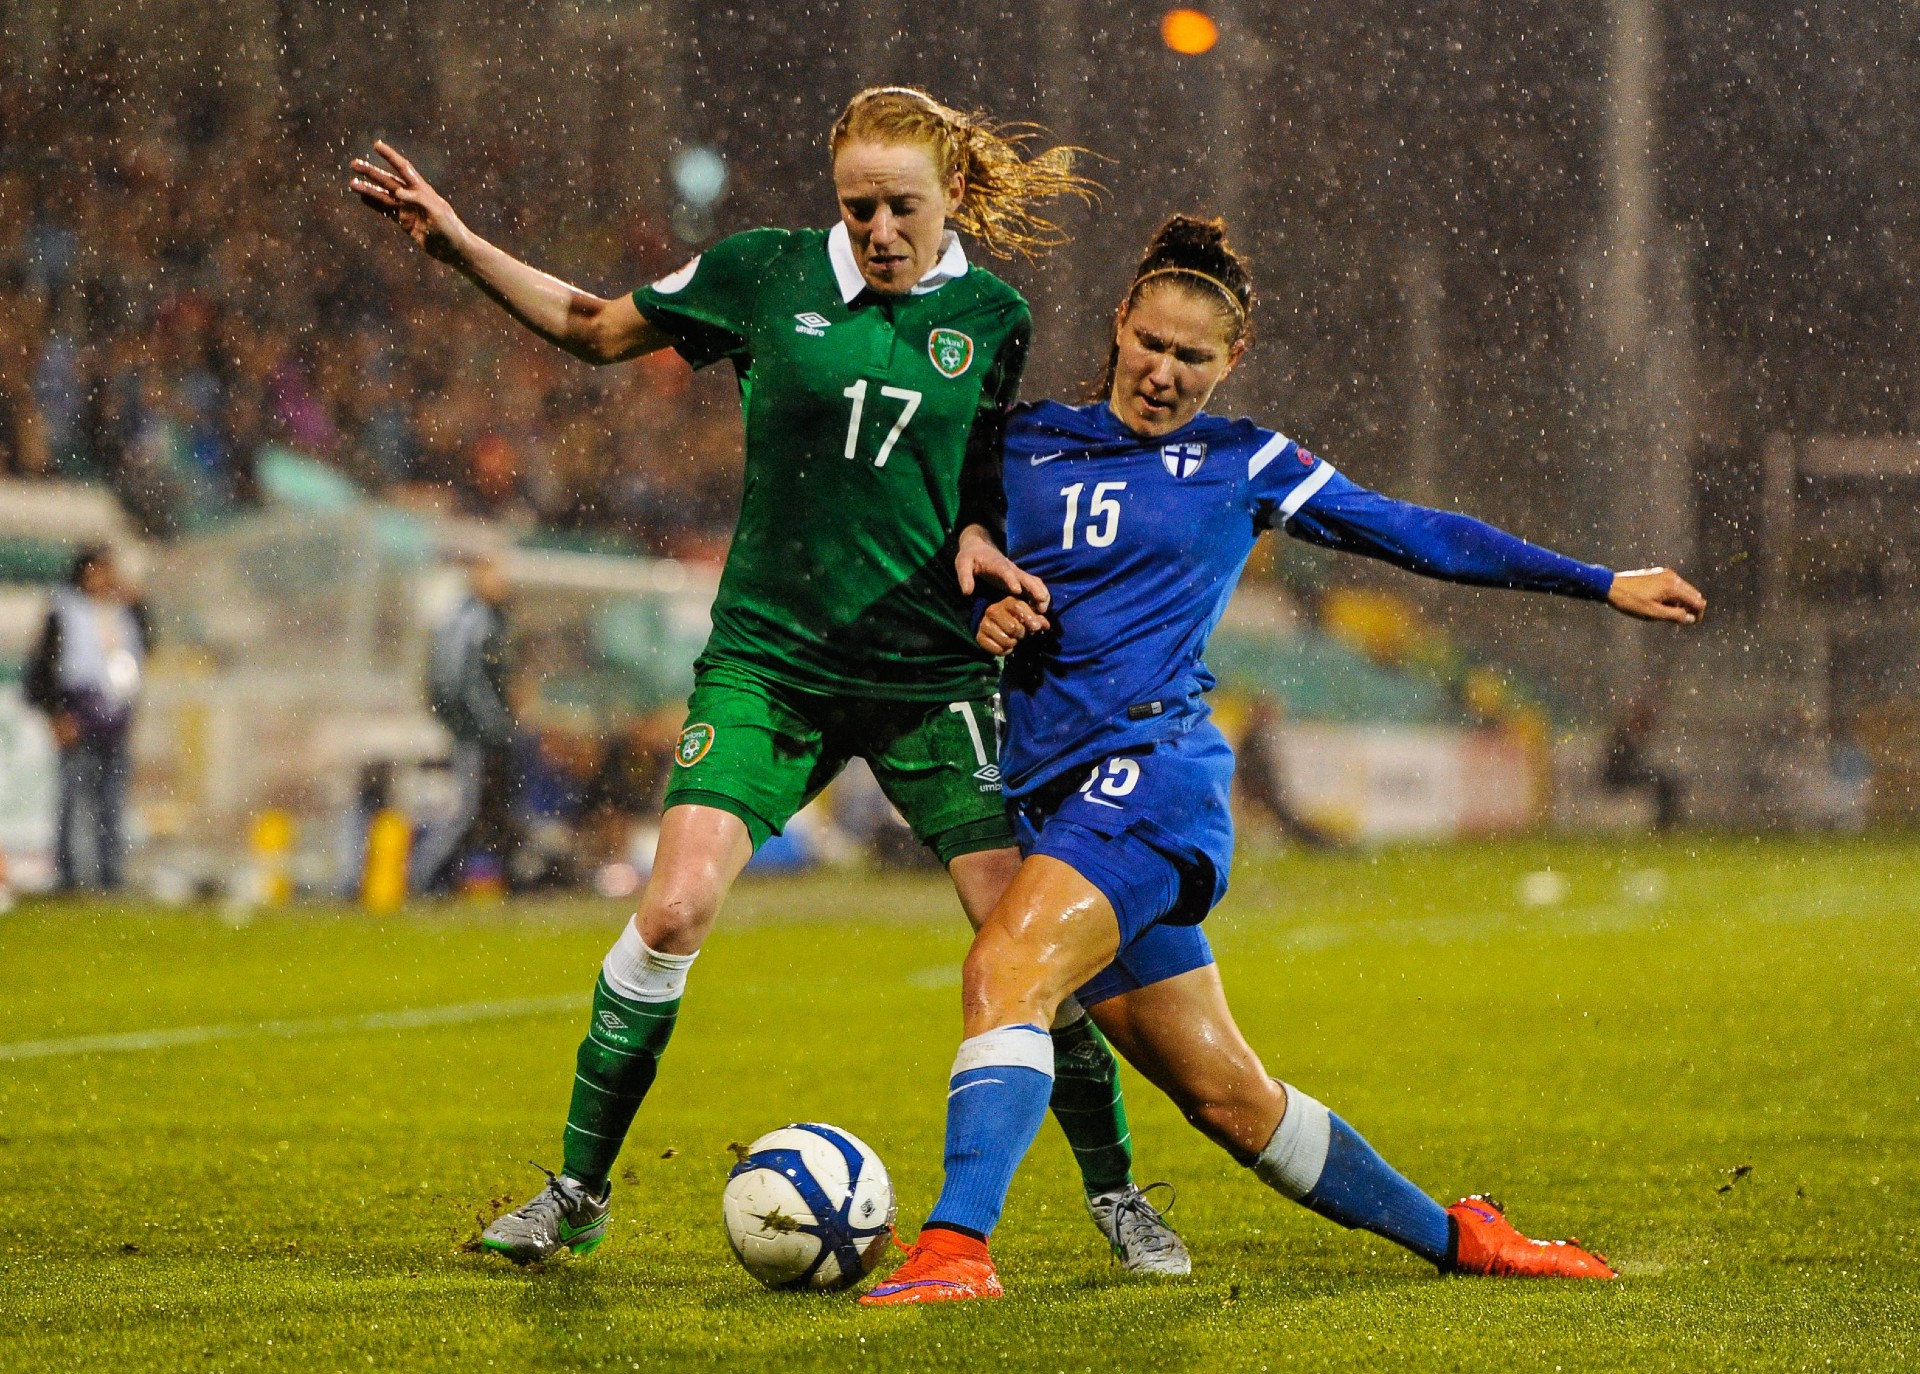 Méabh De Burca in action for the Republic of Ireland against Finland